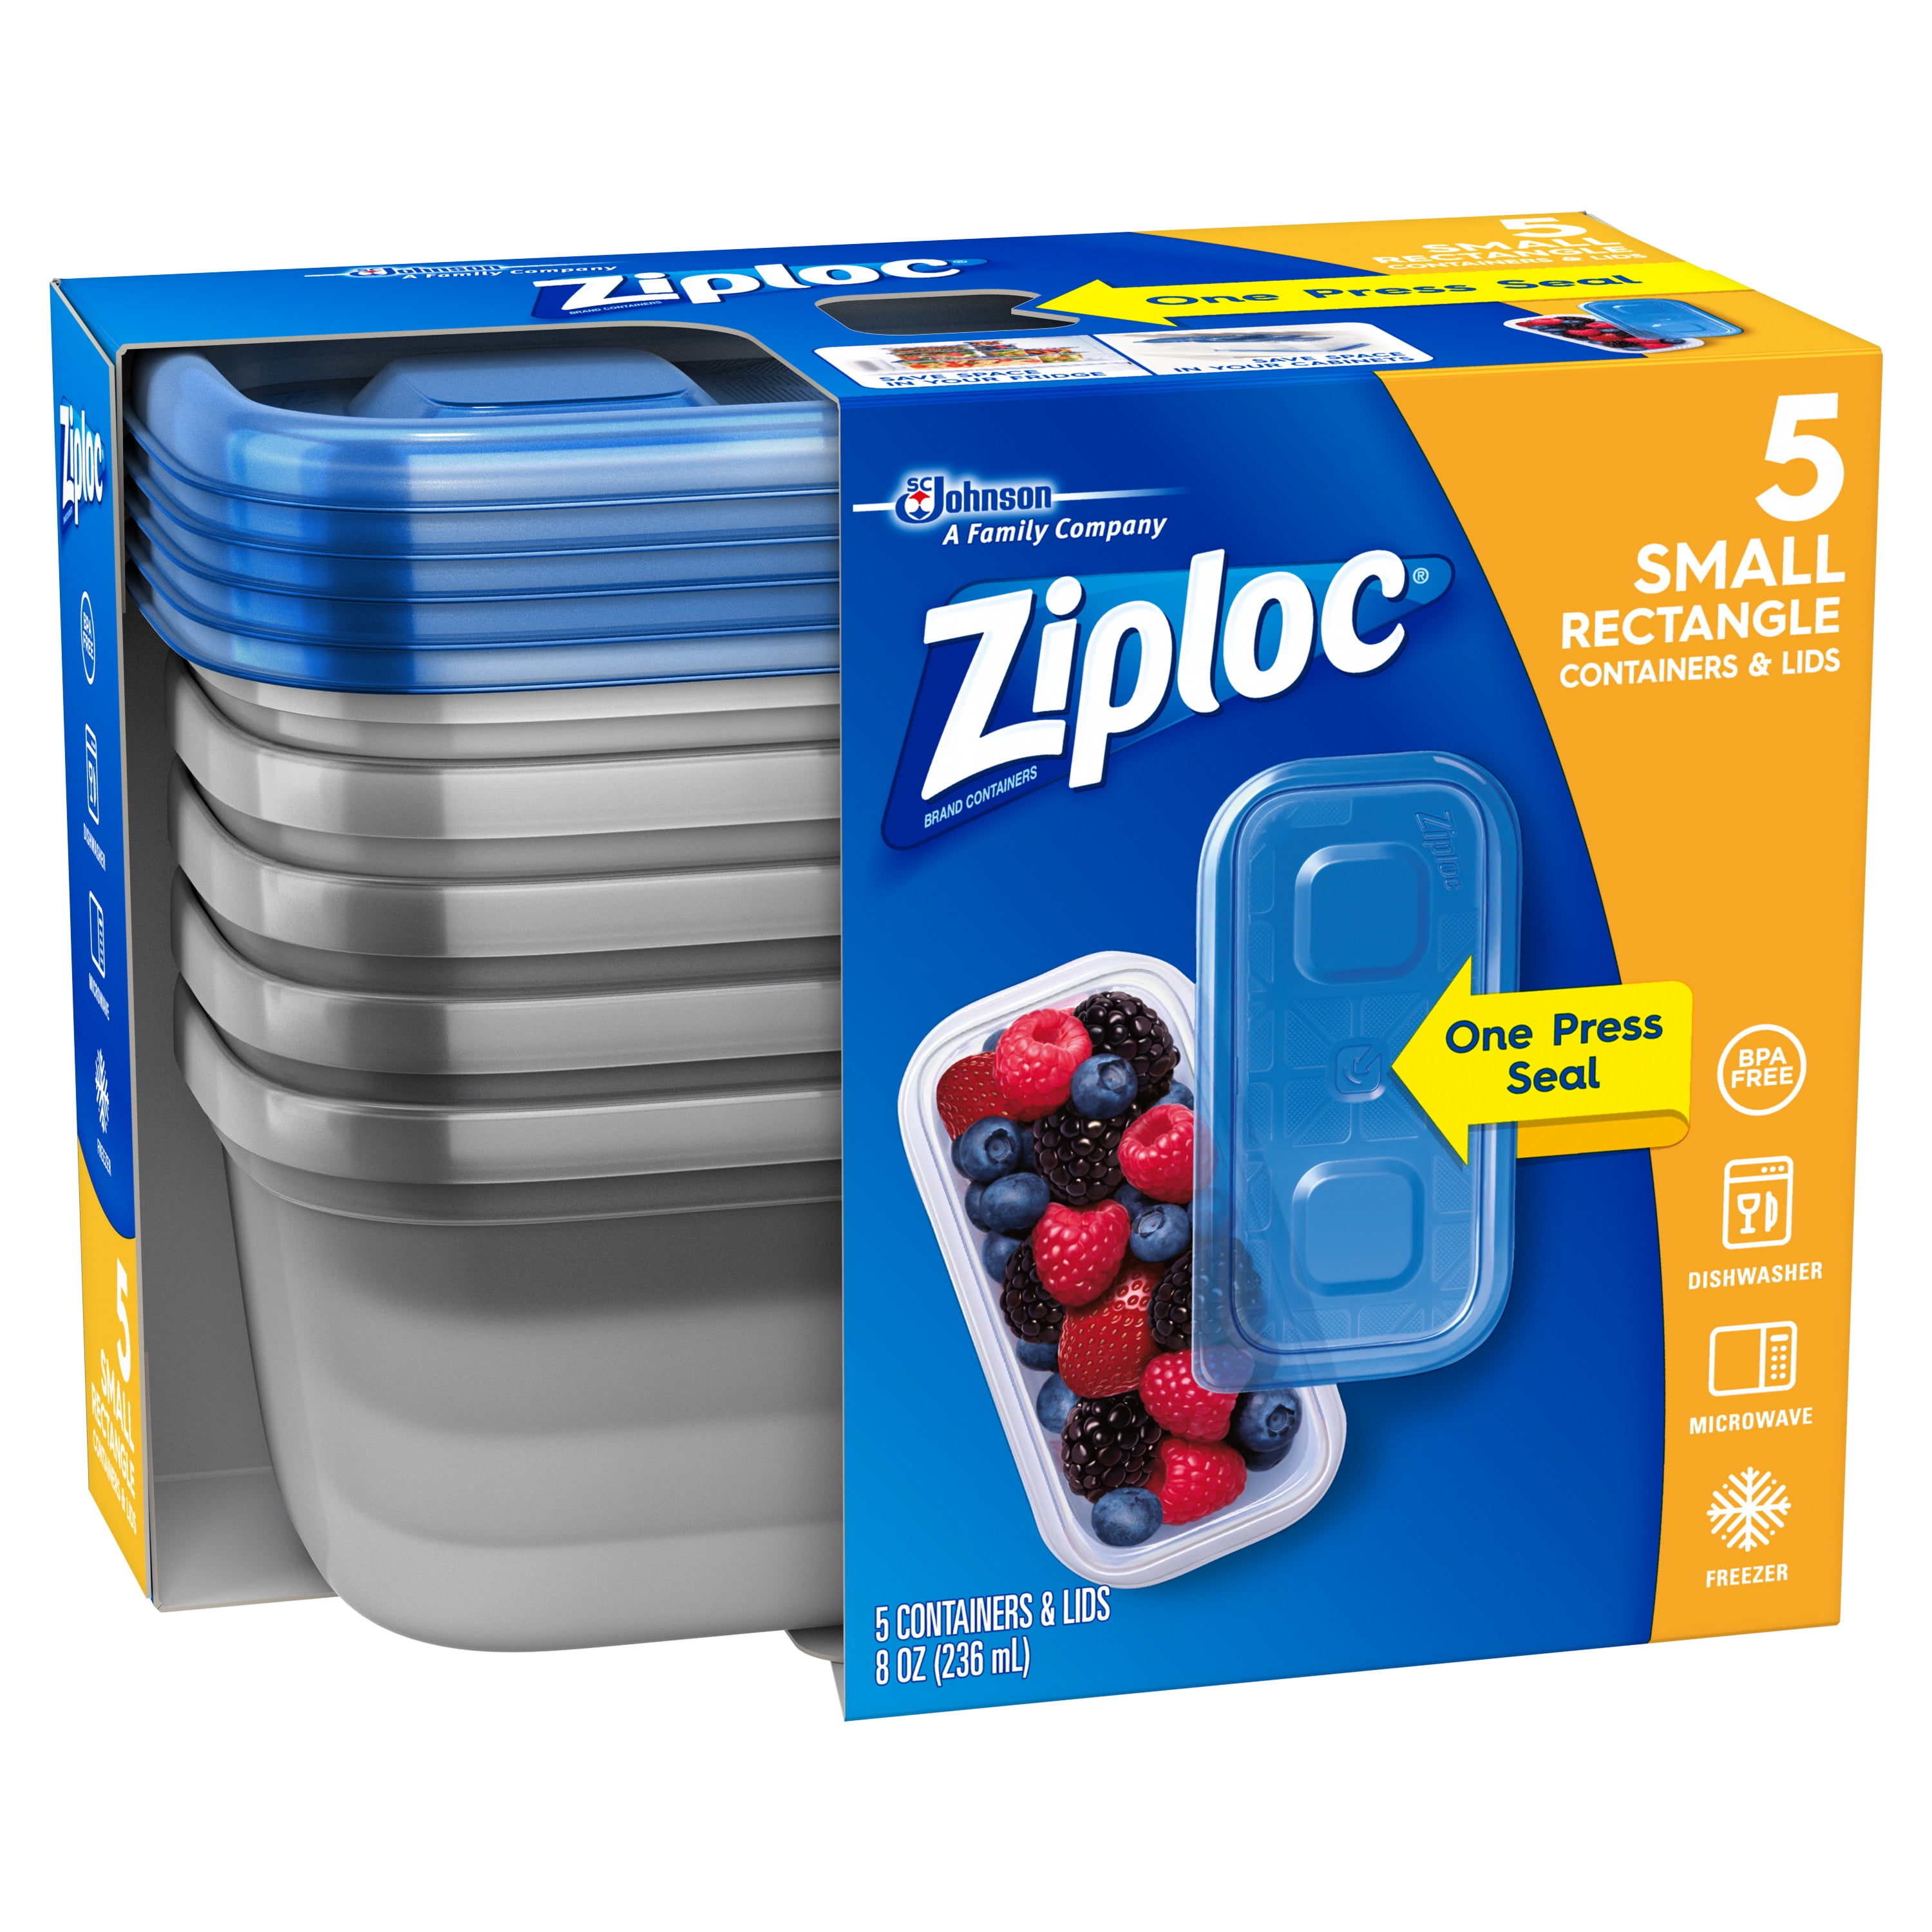 Ziploc®, Divided Rectangle Containers, Ziploc® brand